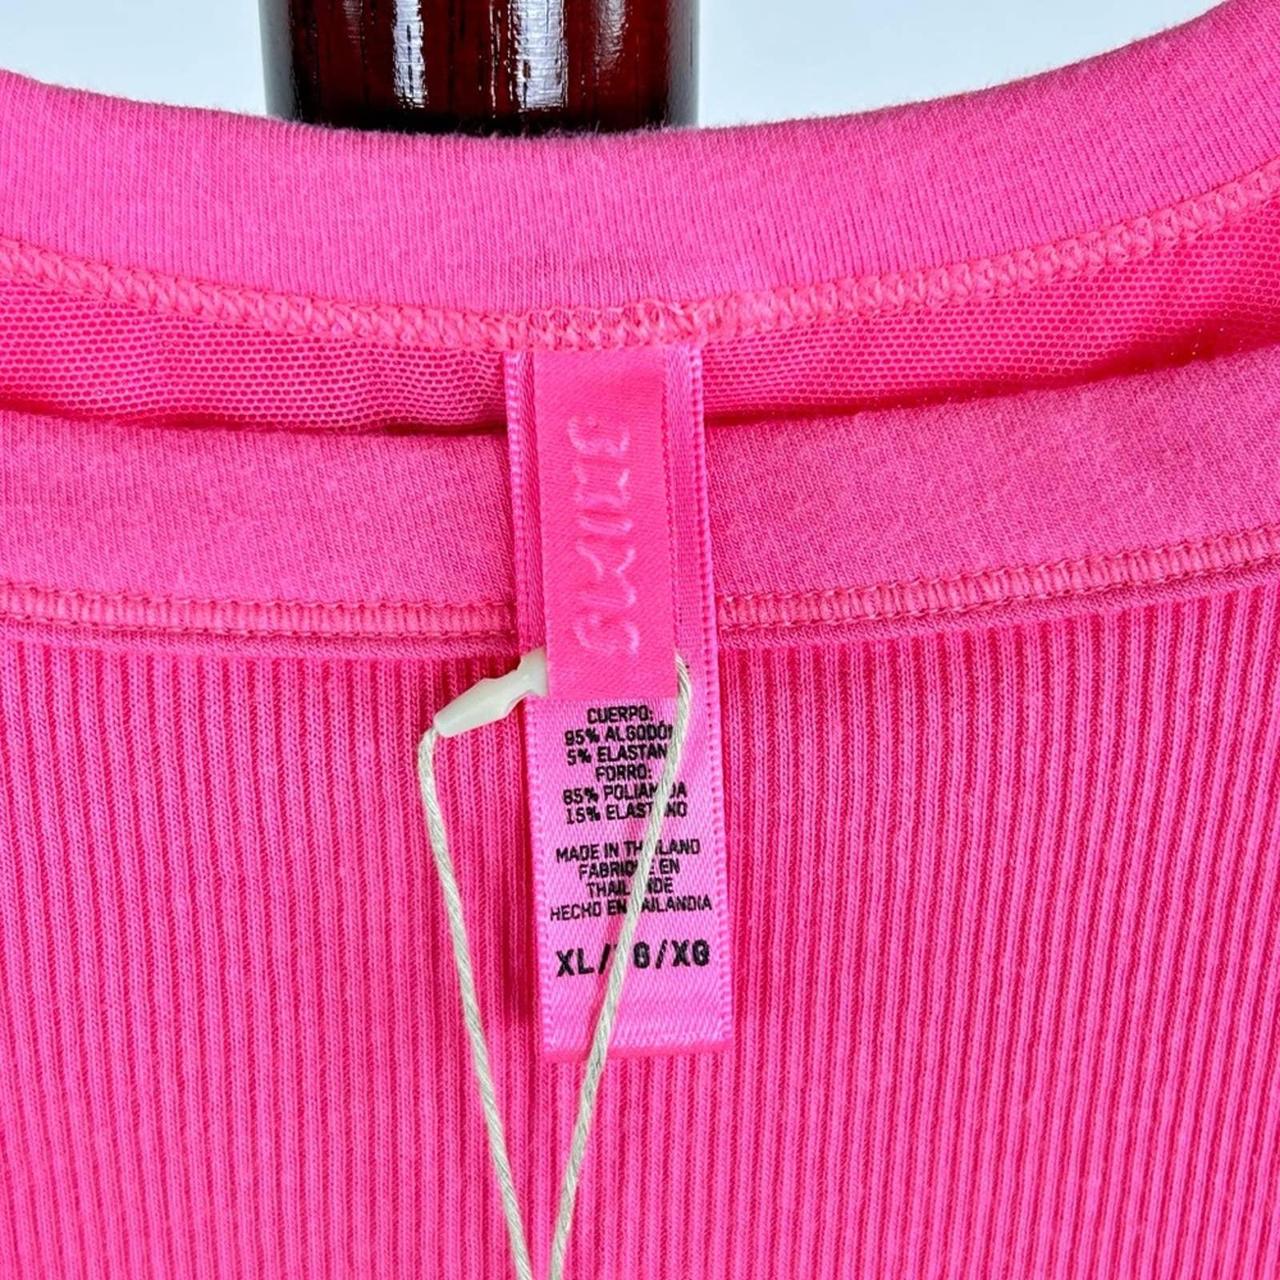 skims Cotton Rib Onesie in sugar pink 💕 #fyp #lifestyle #aesthetic #